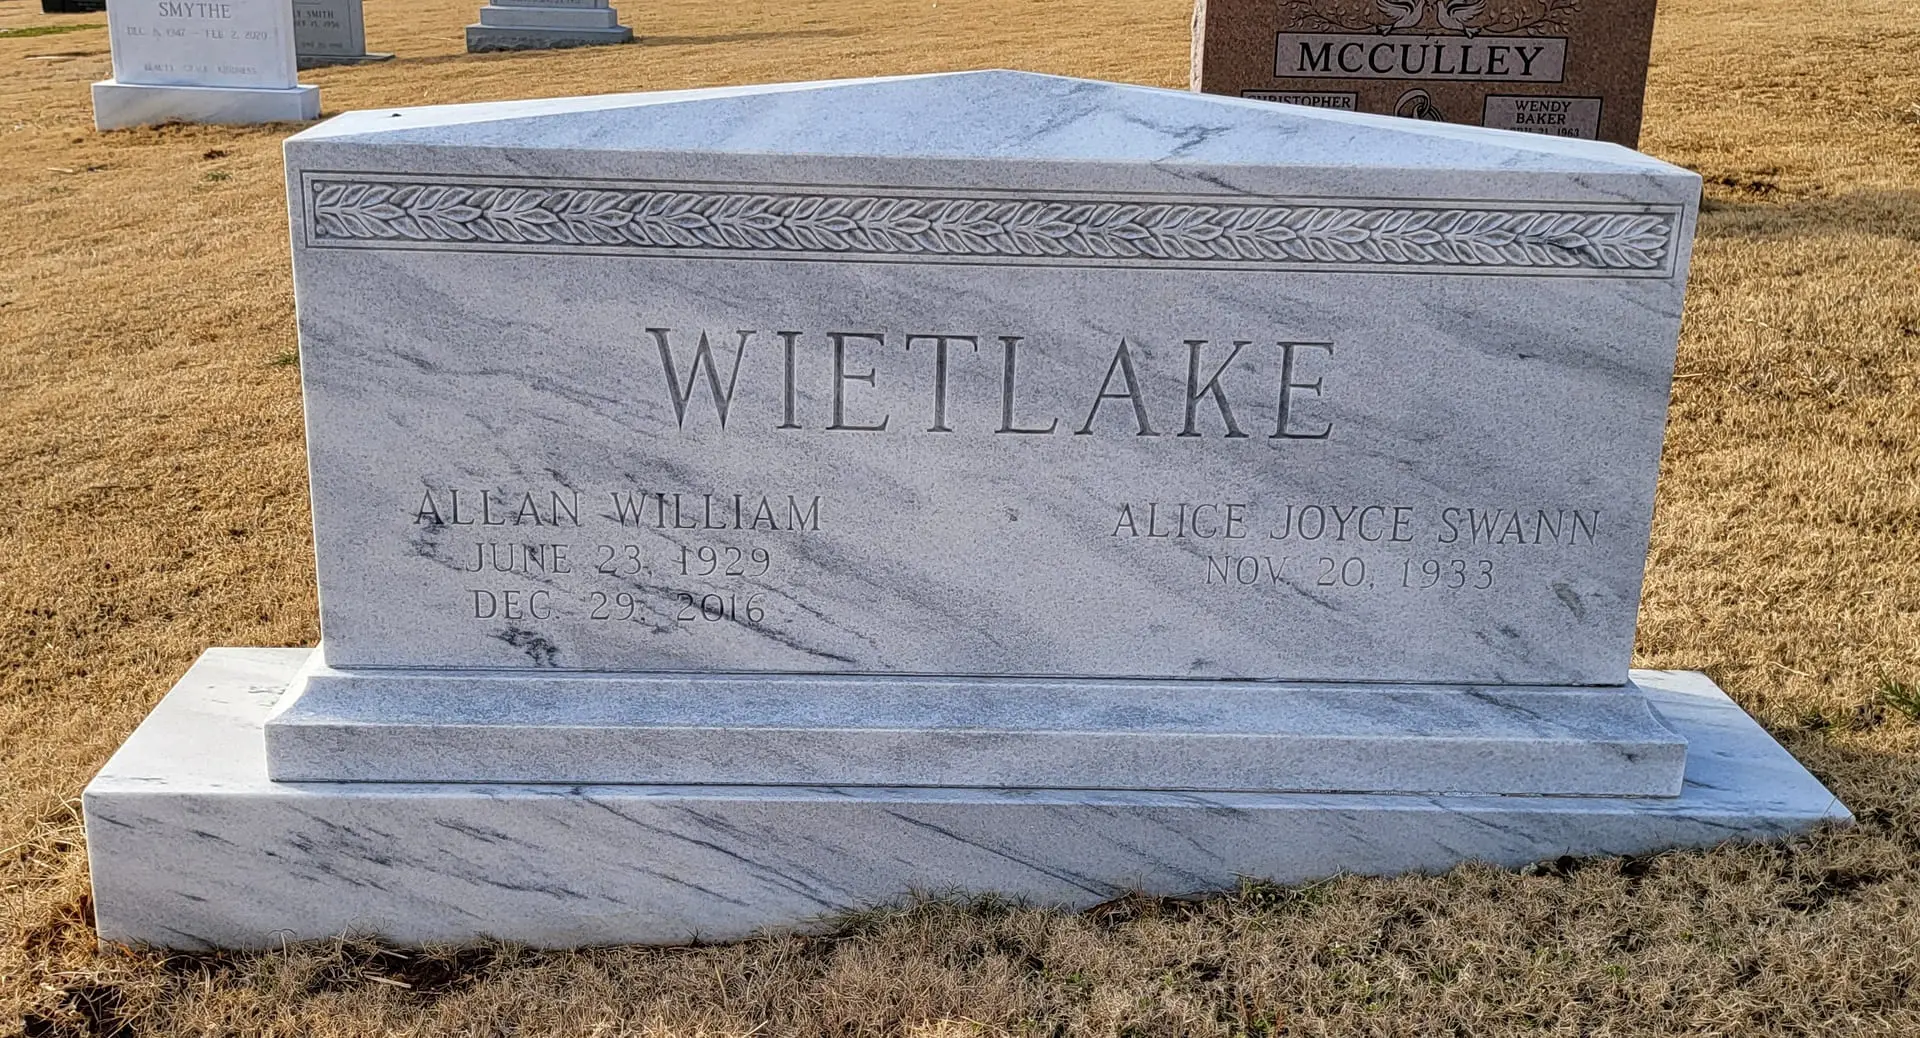 A memorial slab for Allan William and Alice Joyce Swann